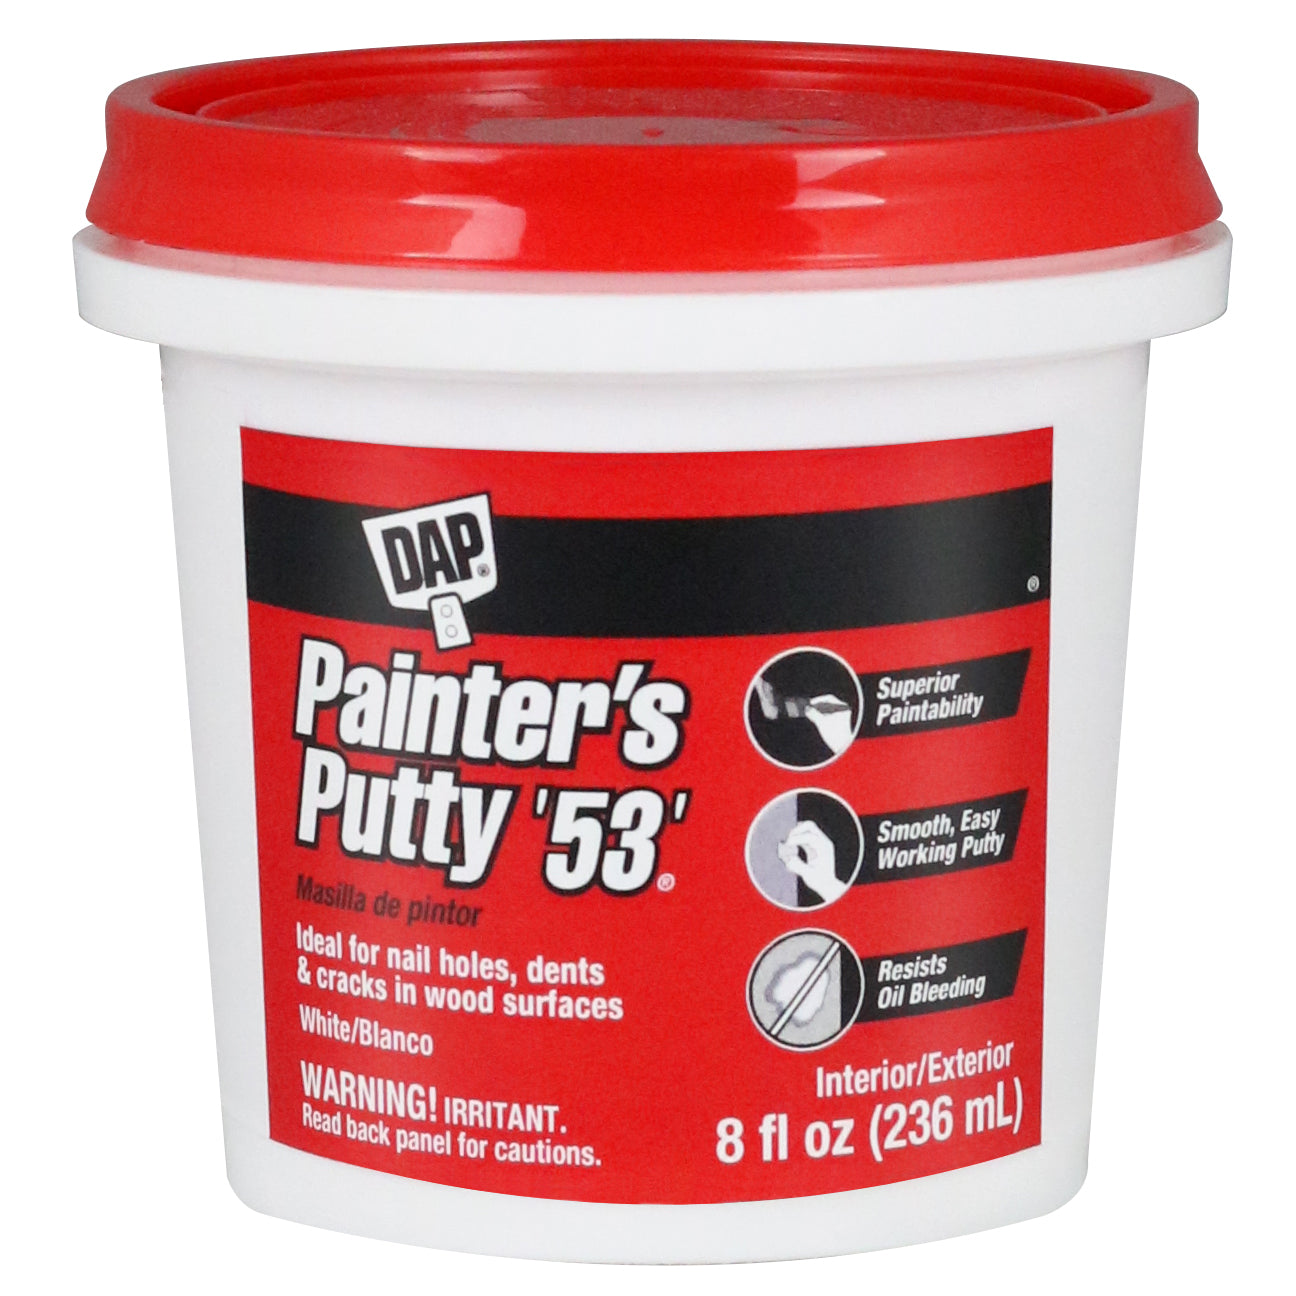 Dap Painter's Putty '53'